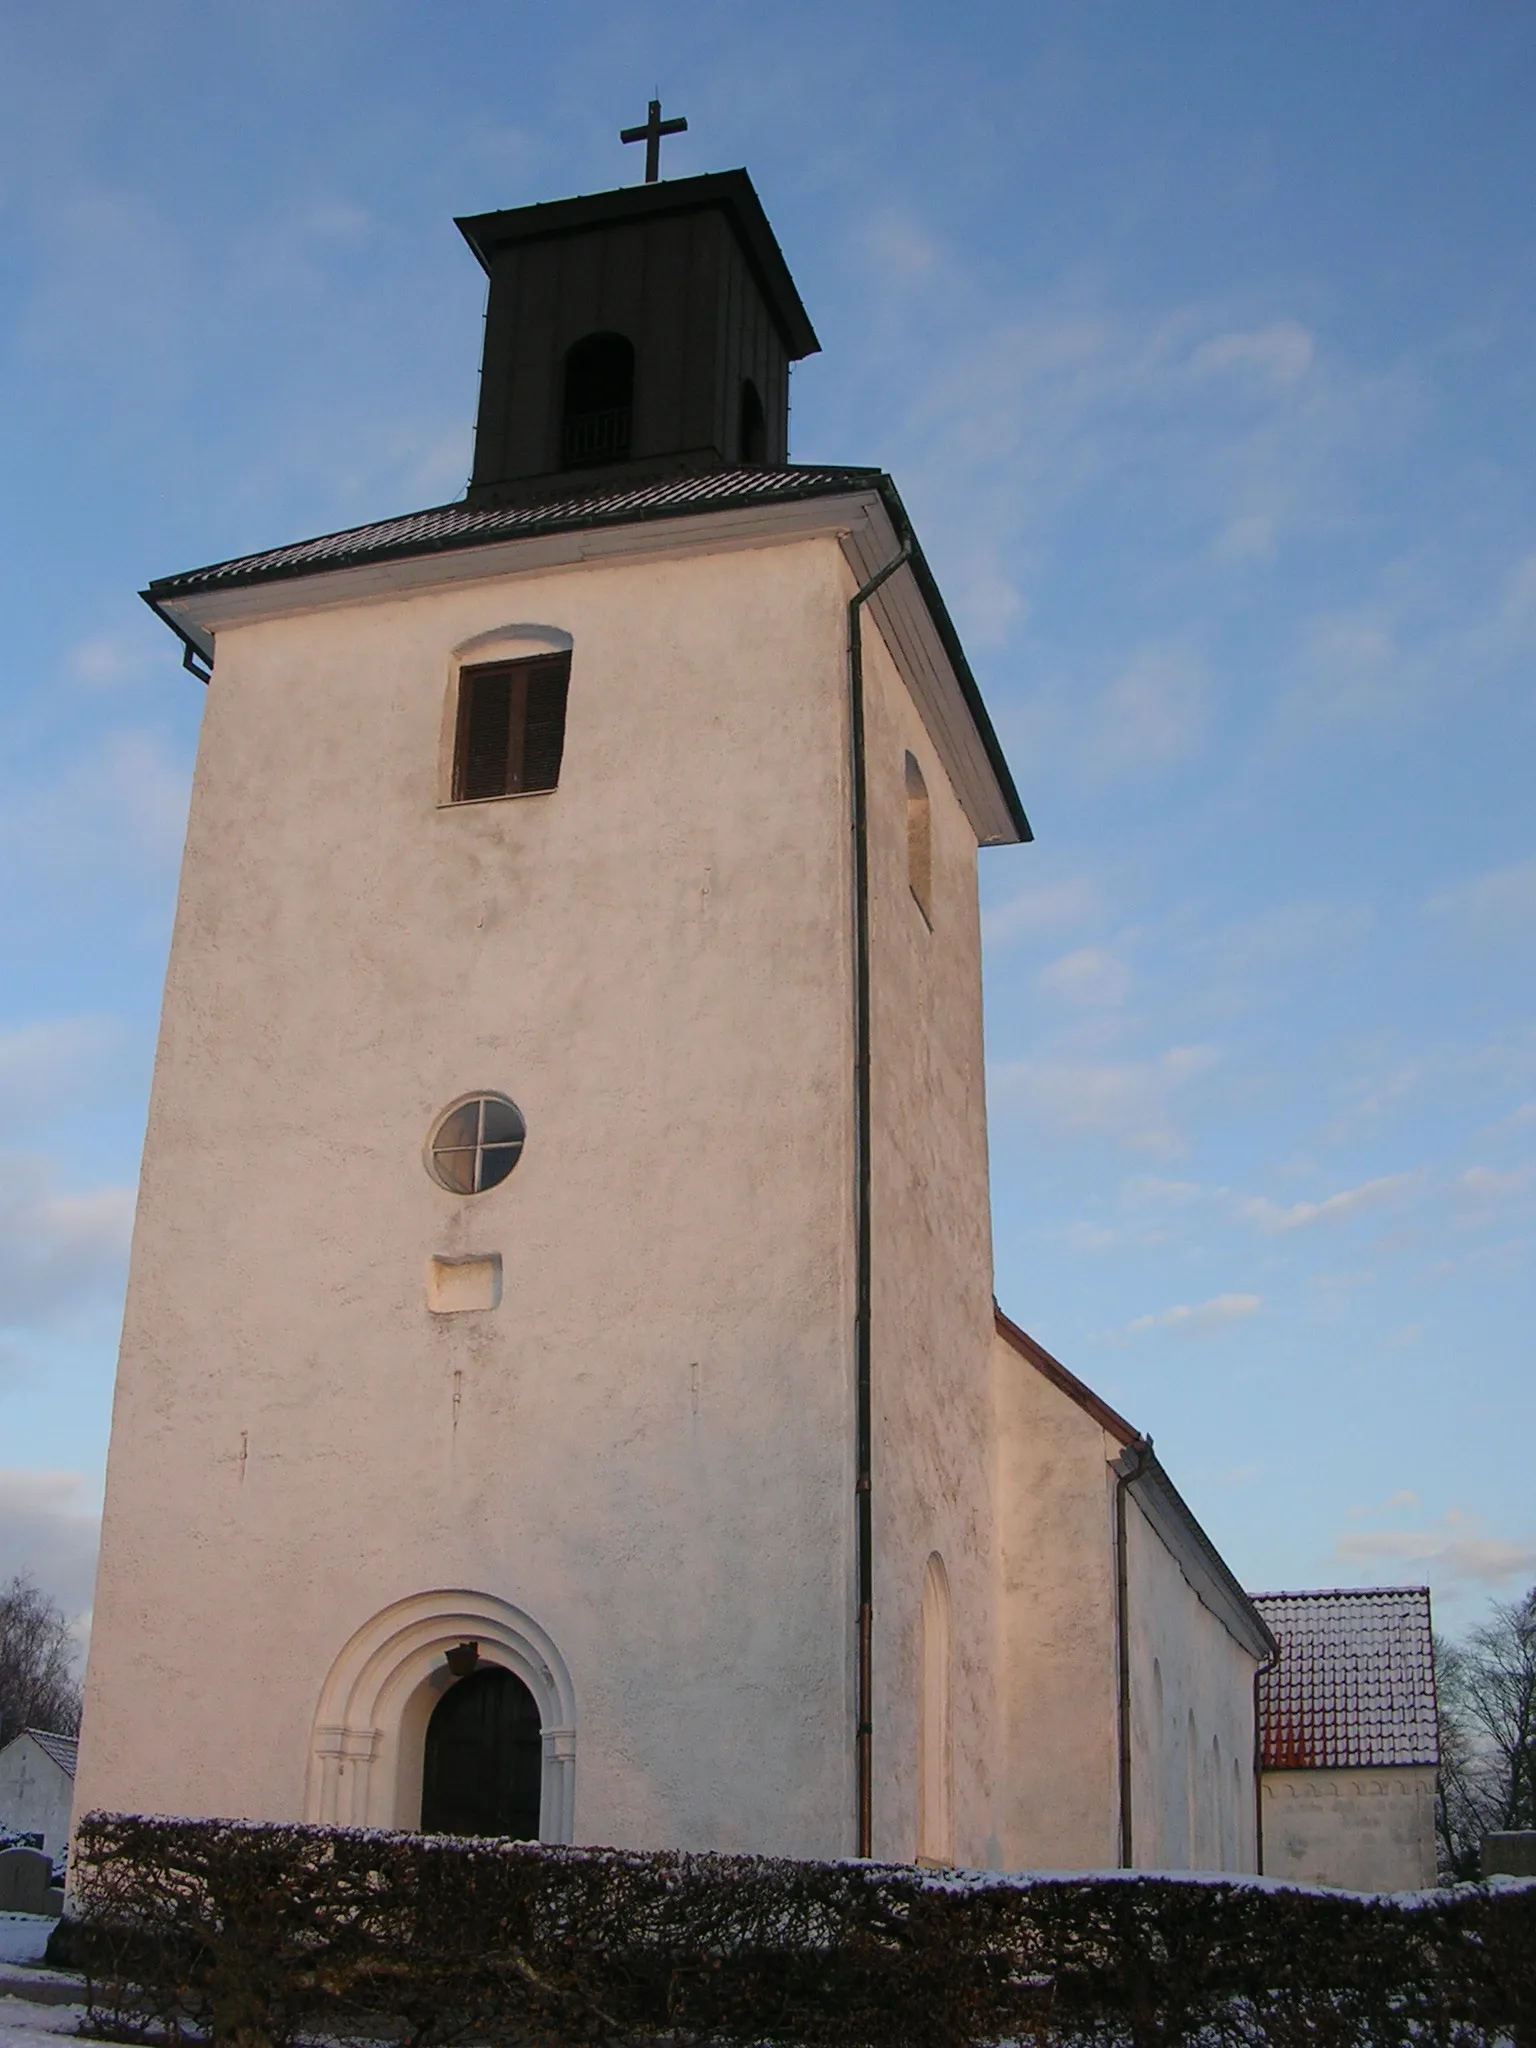 Photo showing: Harlösa kyrka

Author: Väsk
Date: November 2005